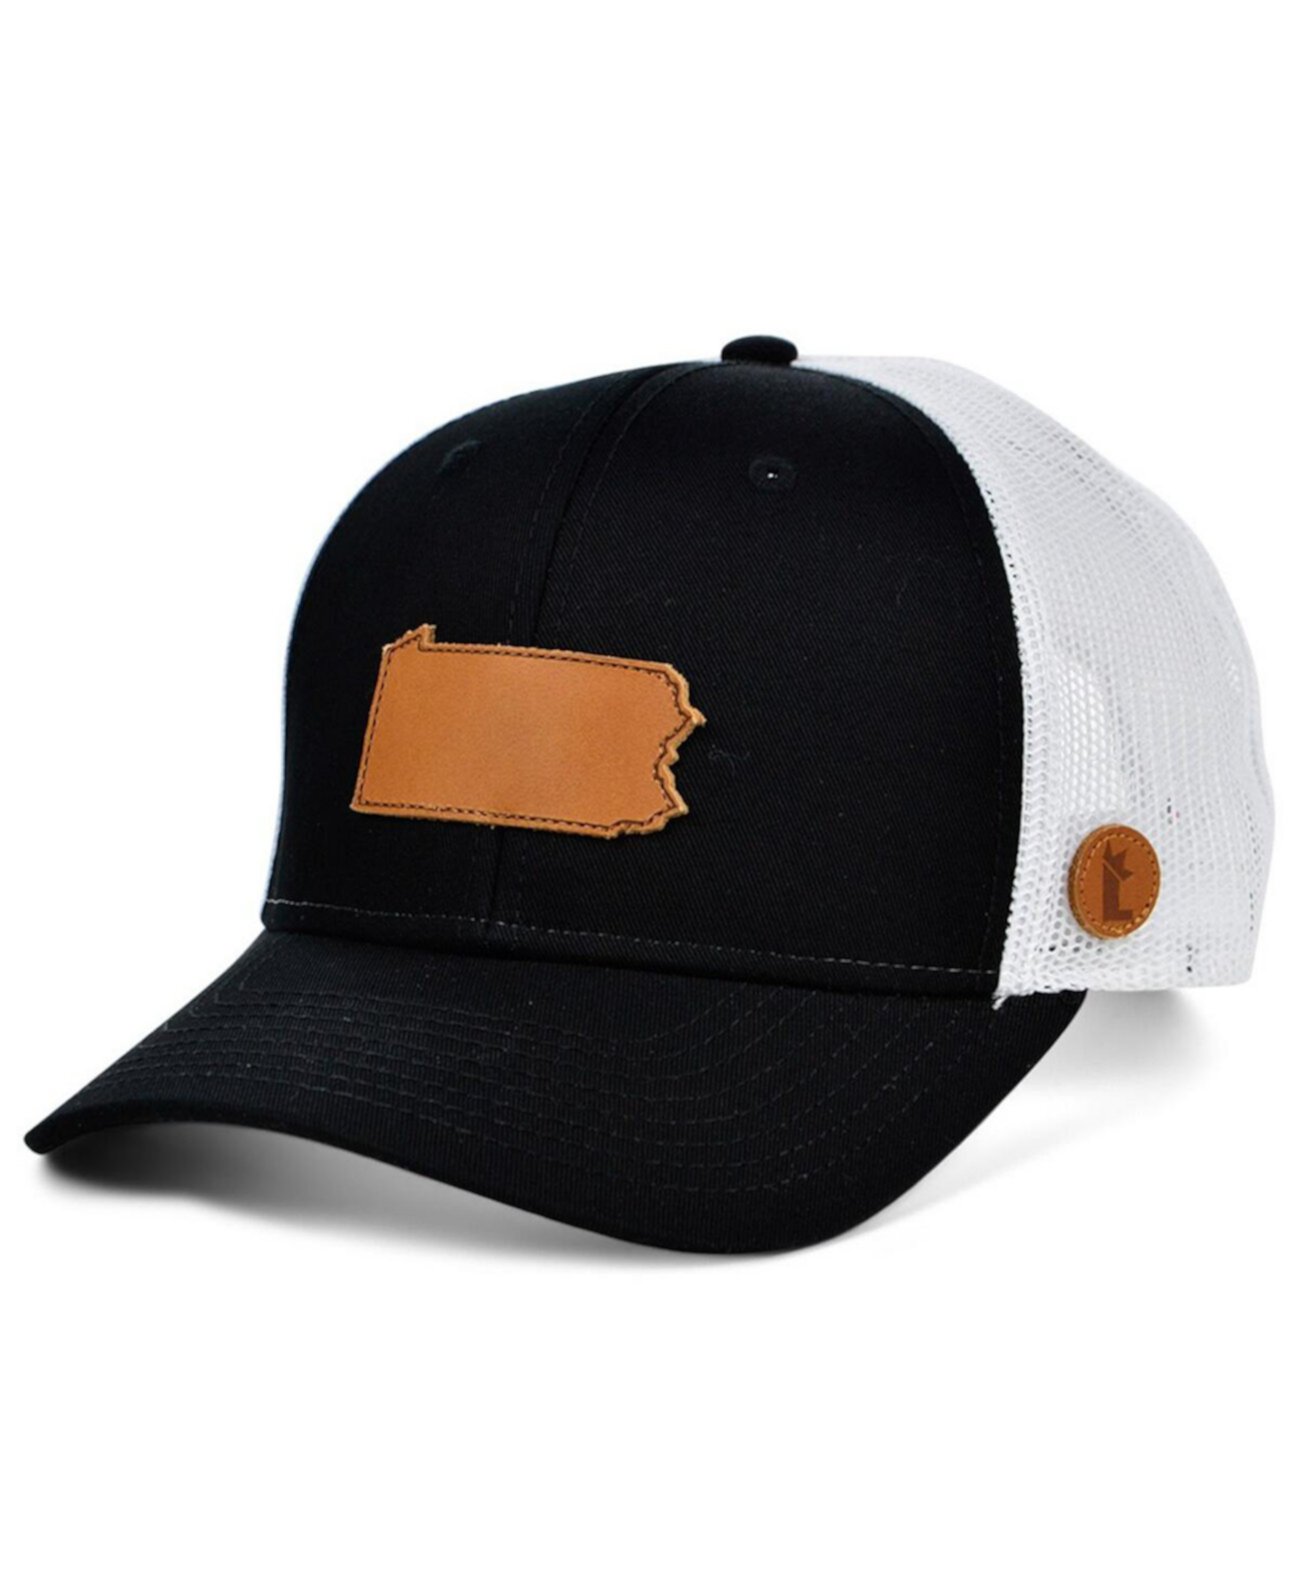 Men's Black and White Pennsylvania Statement Trucker Snapback Adjustable Hat Local Crowns